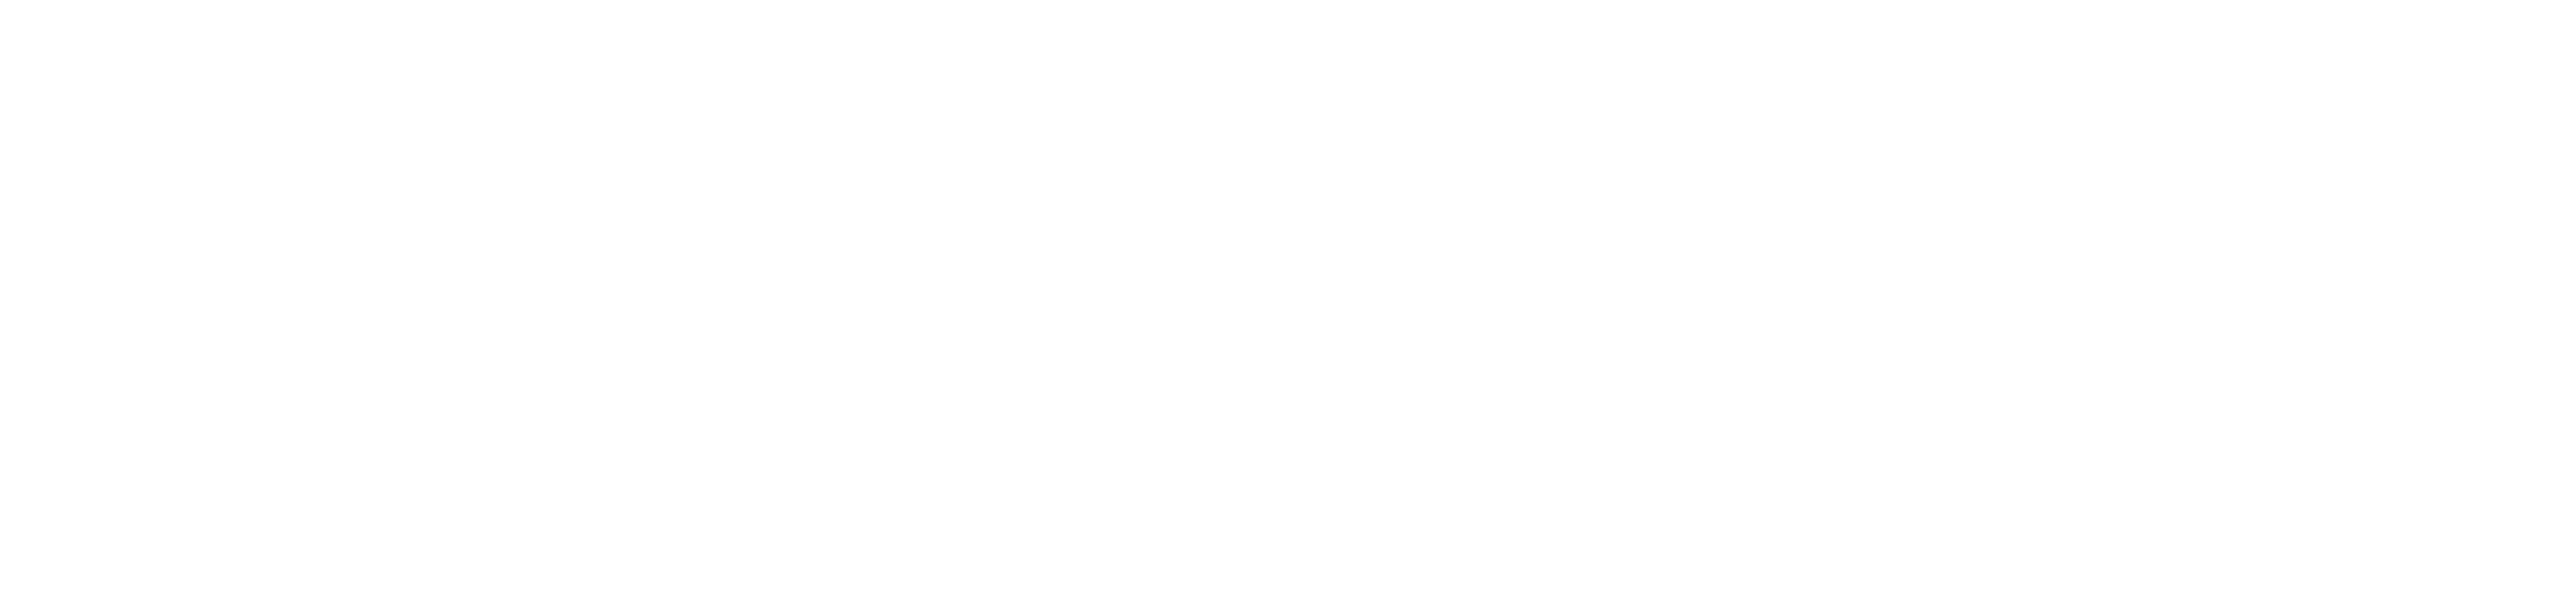 iMEDIC Congress 2023